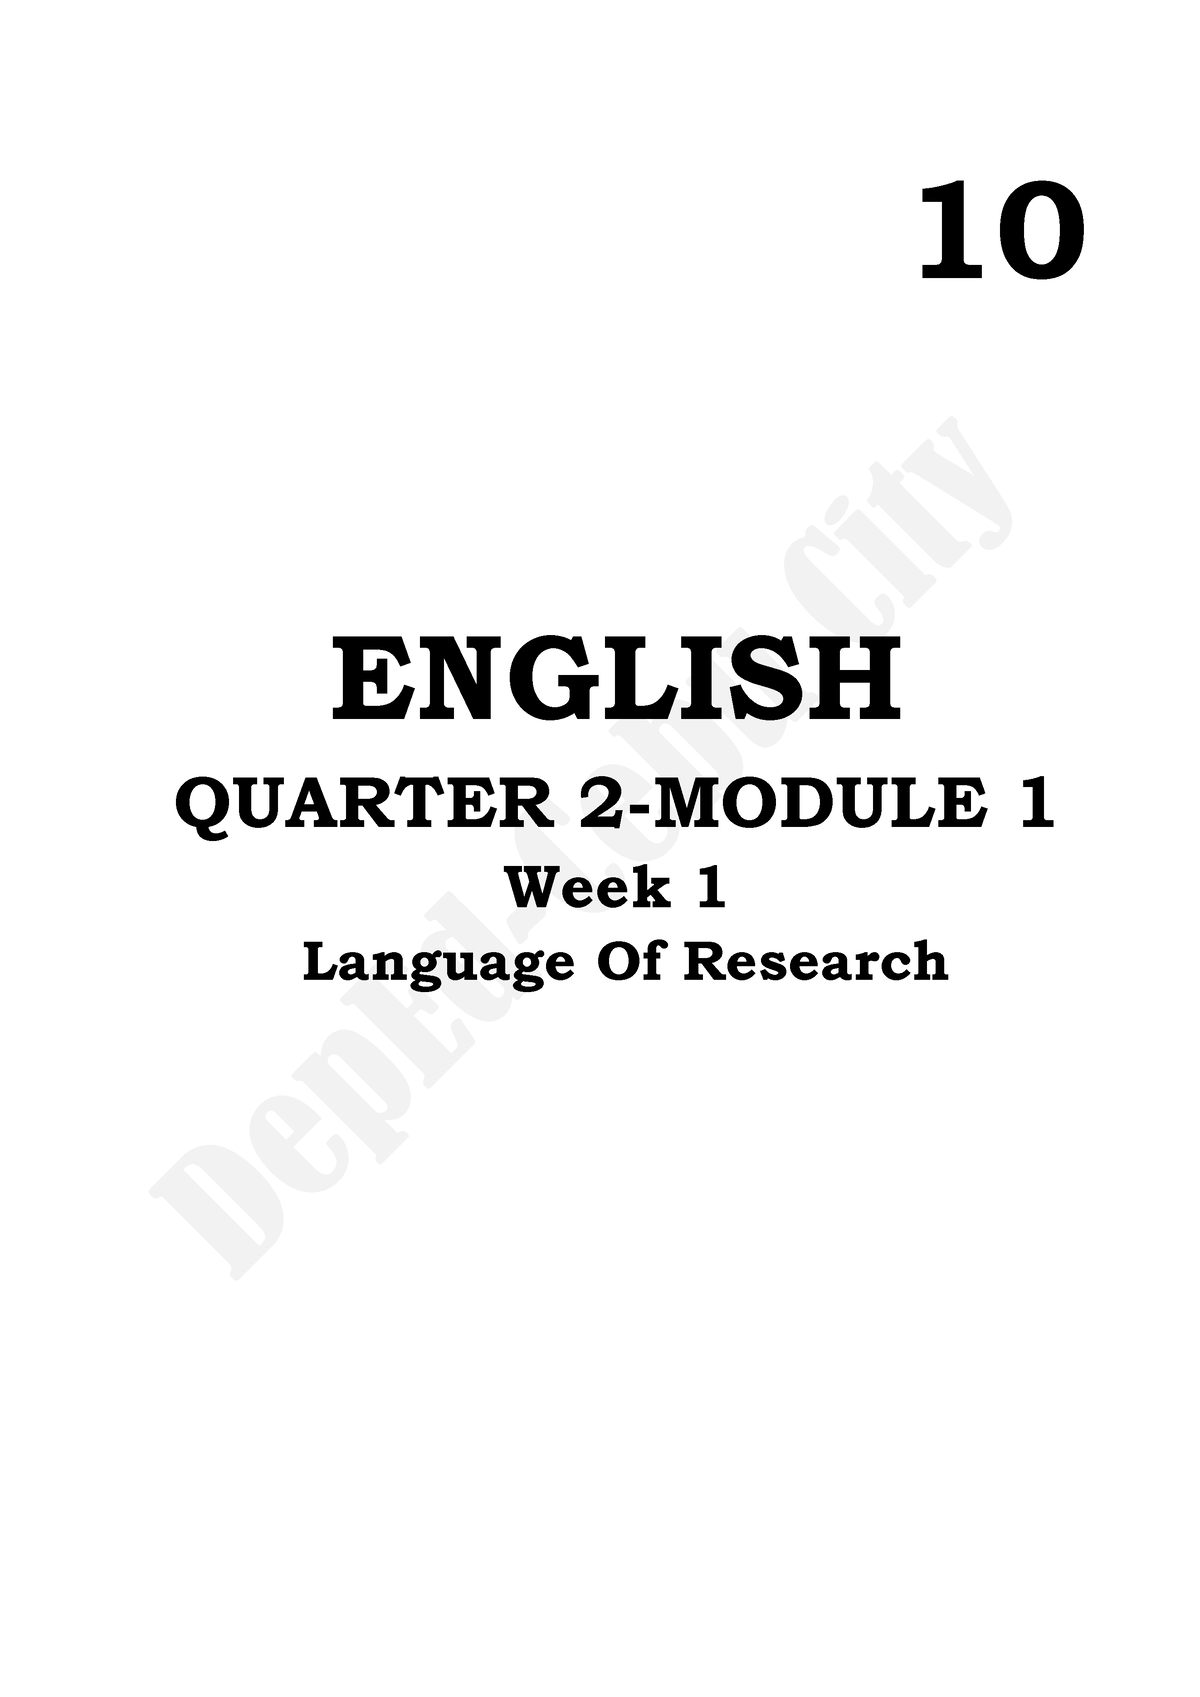 English 10 Q2 Module 1 10 English Quarter 2 Module 1 Week 1 Language Of Research Pre Test 7615